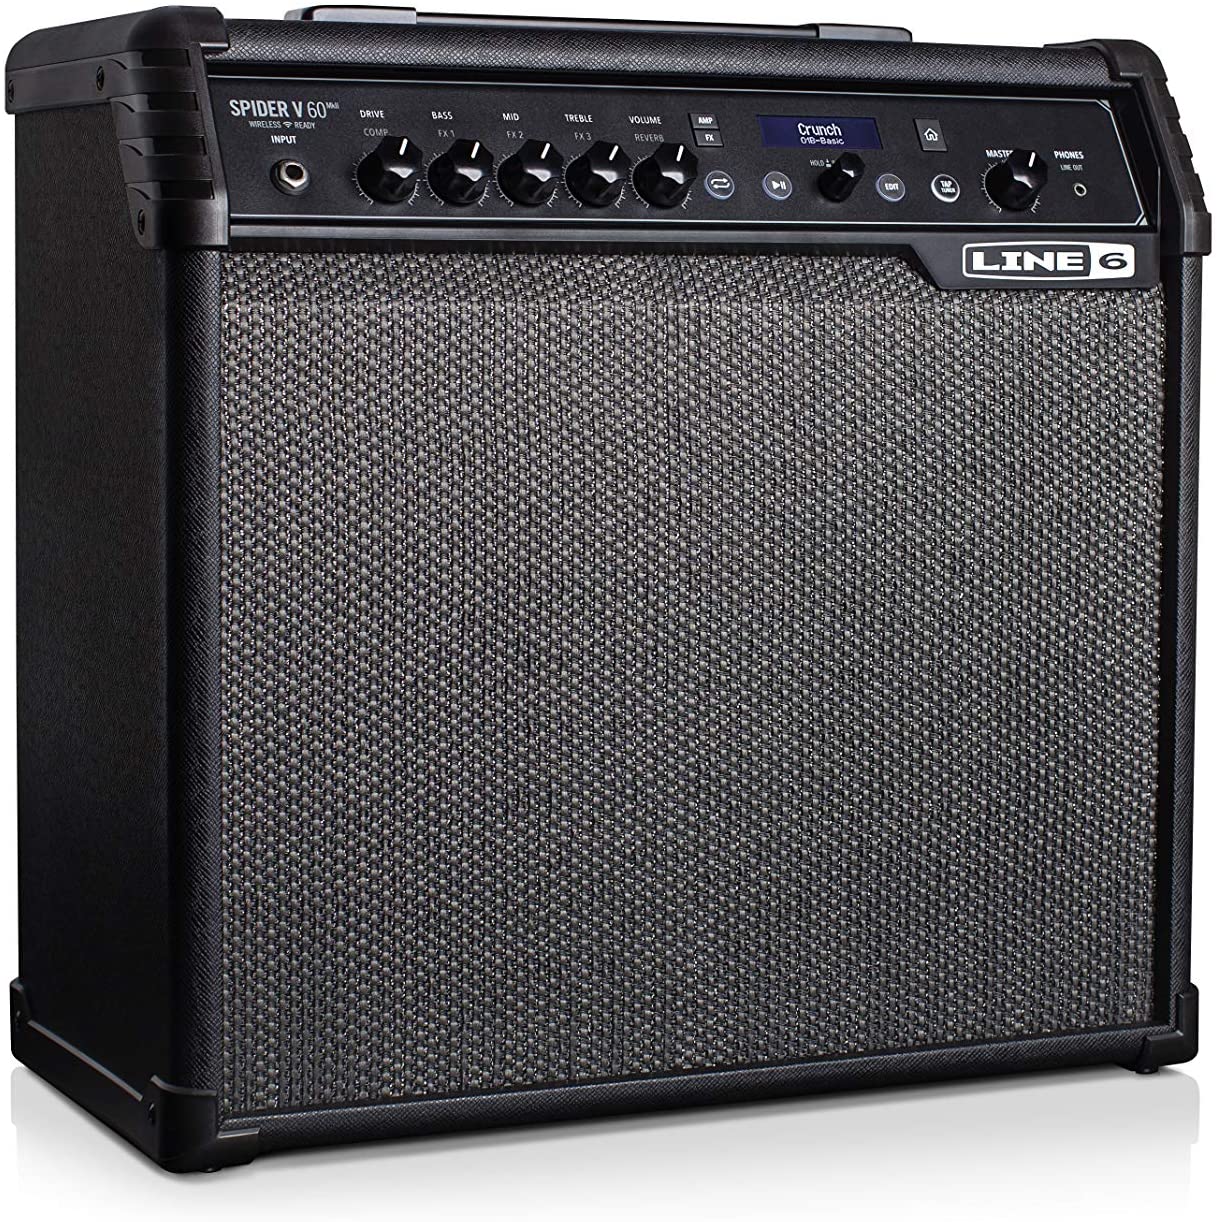 Line 6 Spider V 60 MkII Electric Guitar Amplifier